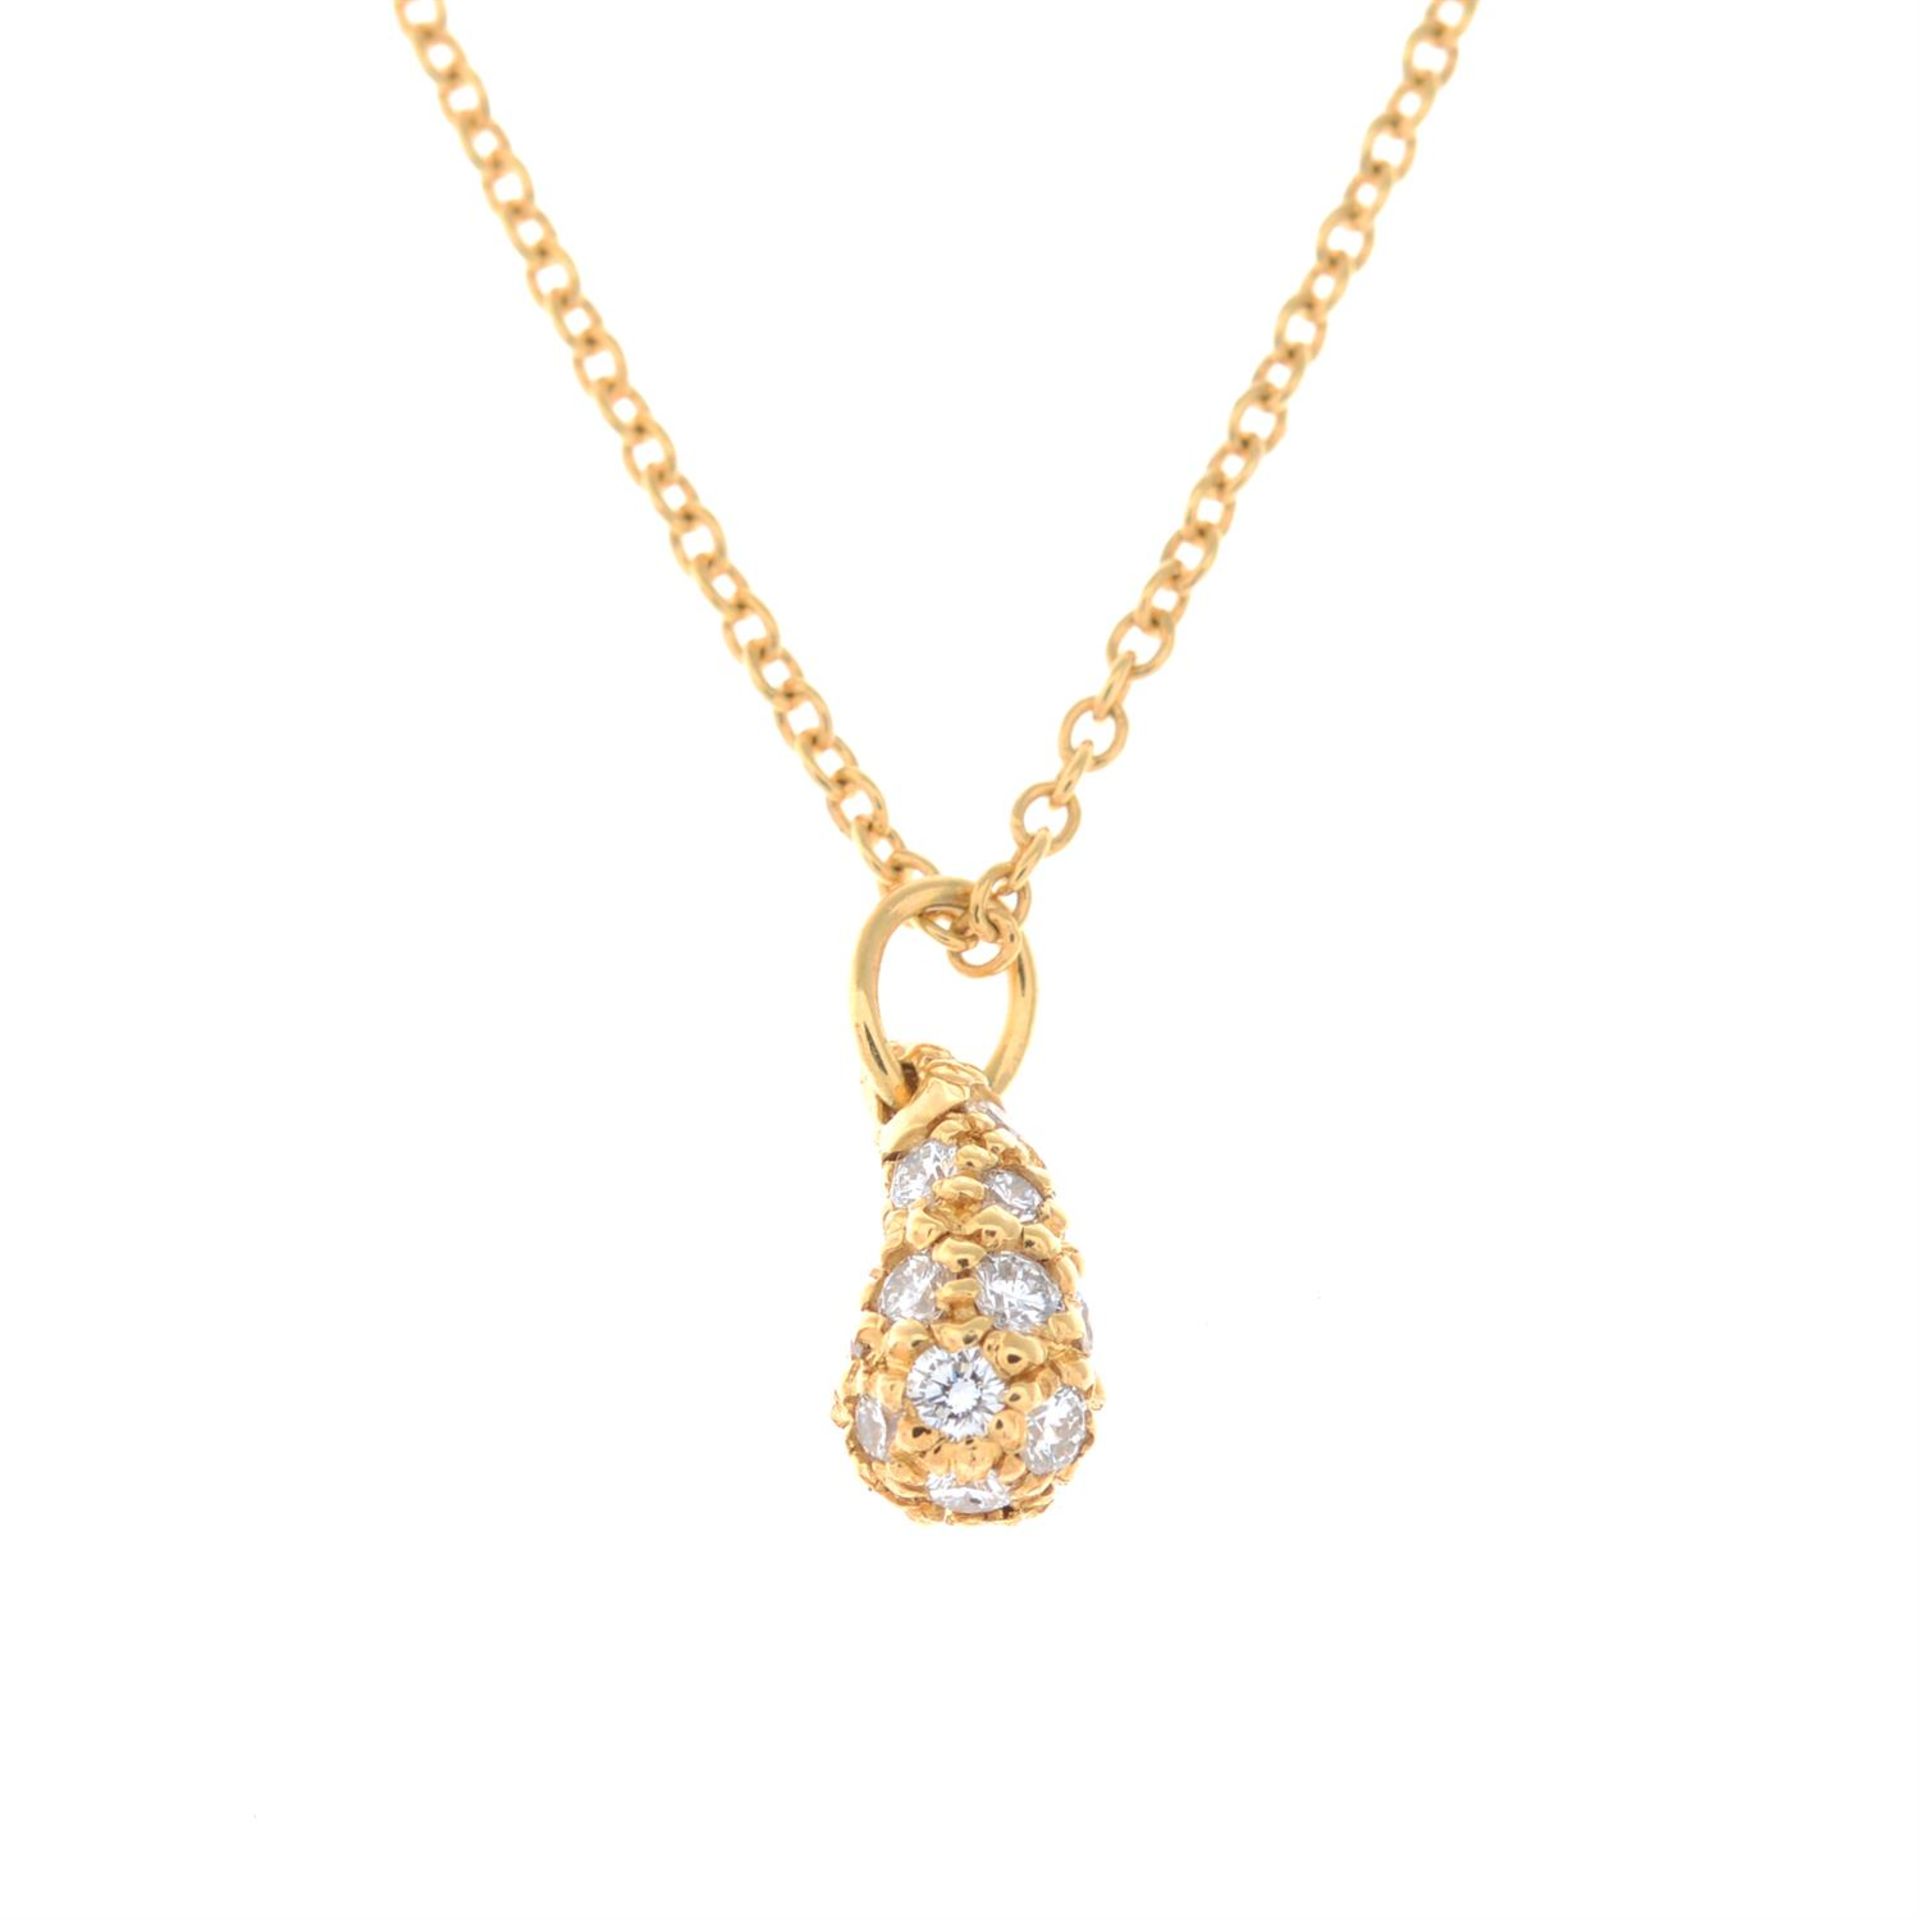 A brilliant-cut diamond 'Teardrop' pendant, with chain, by Elsa Peretti for Tiffany & Co.